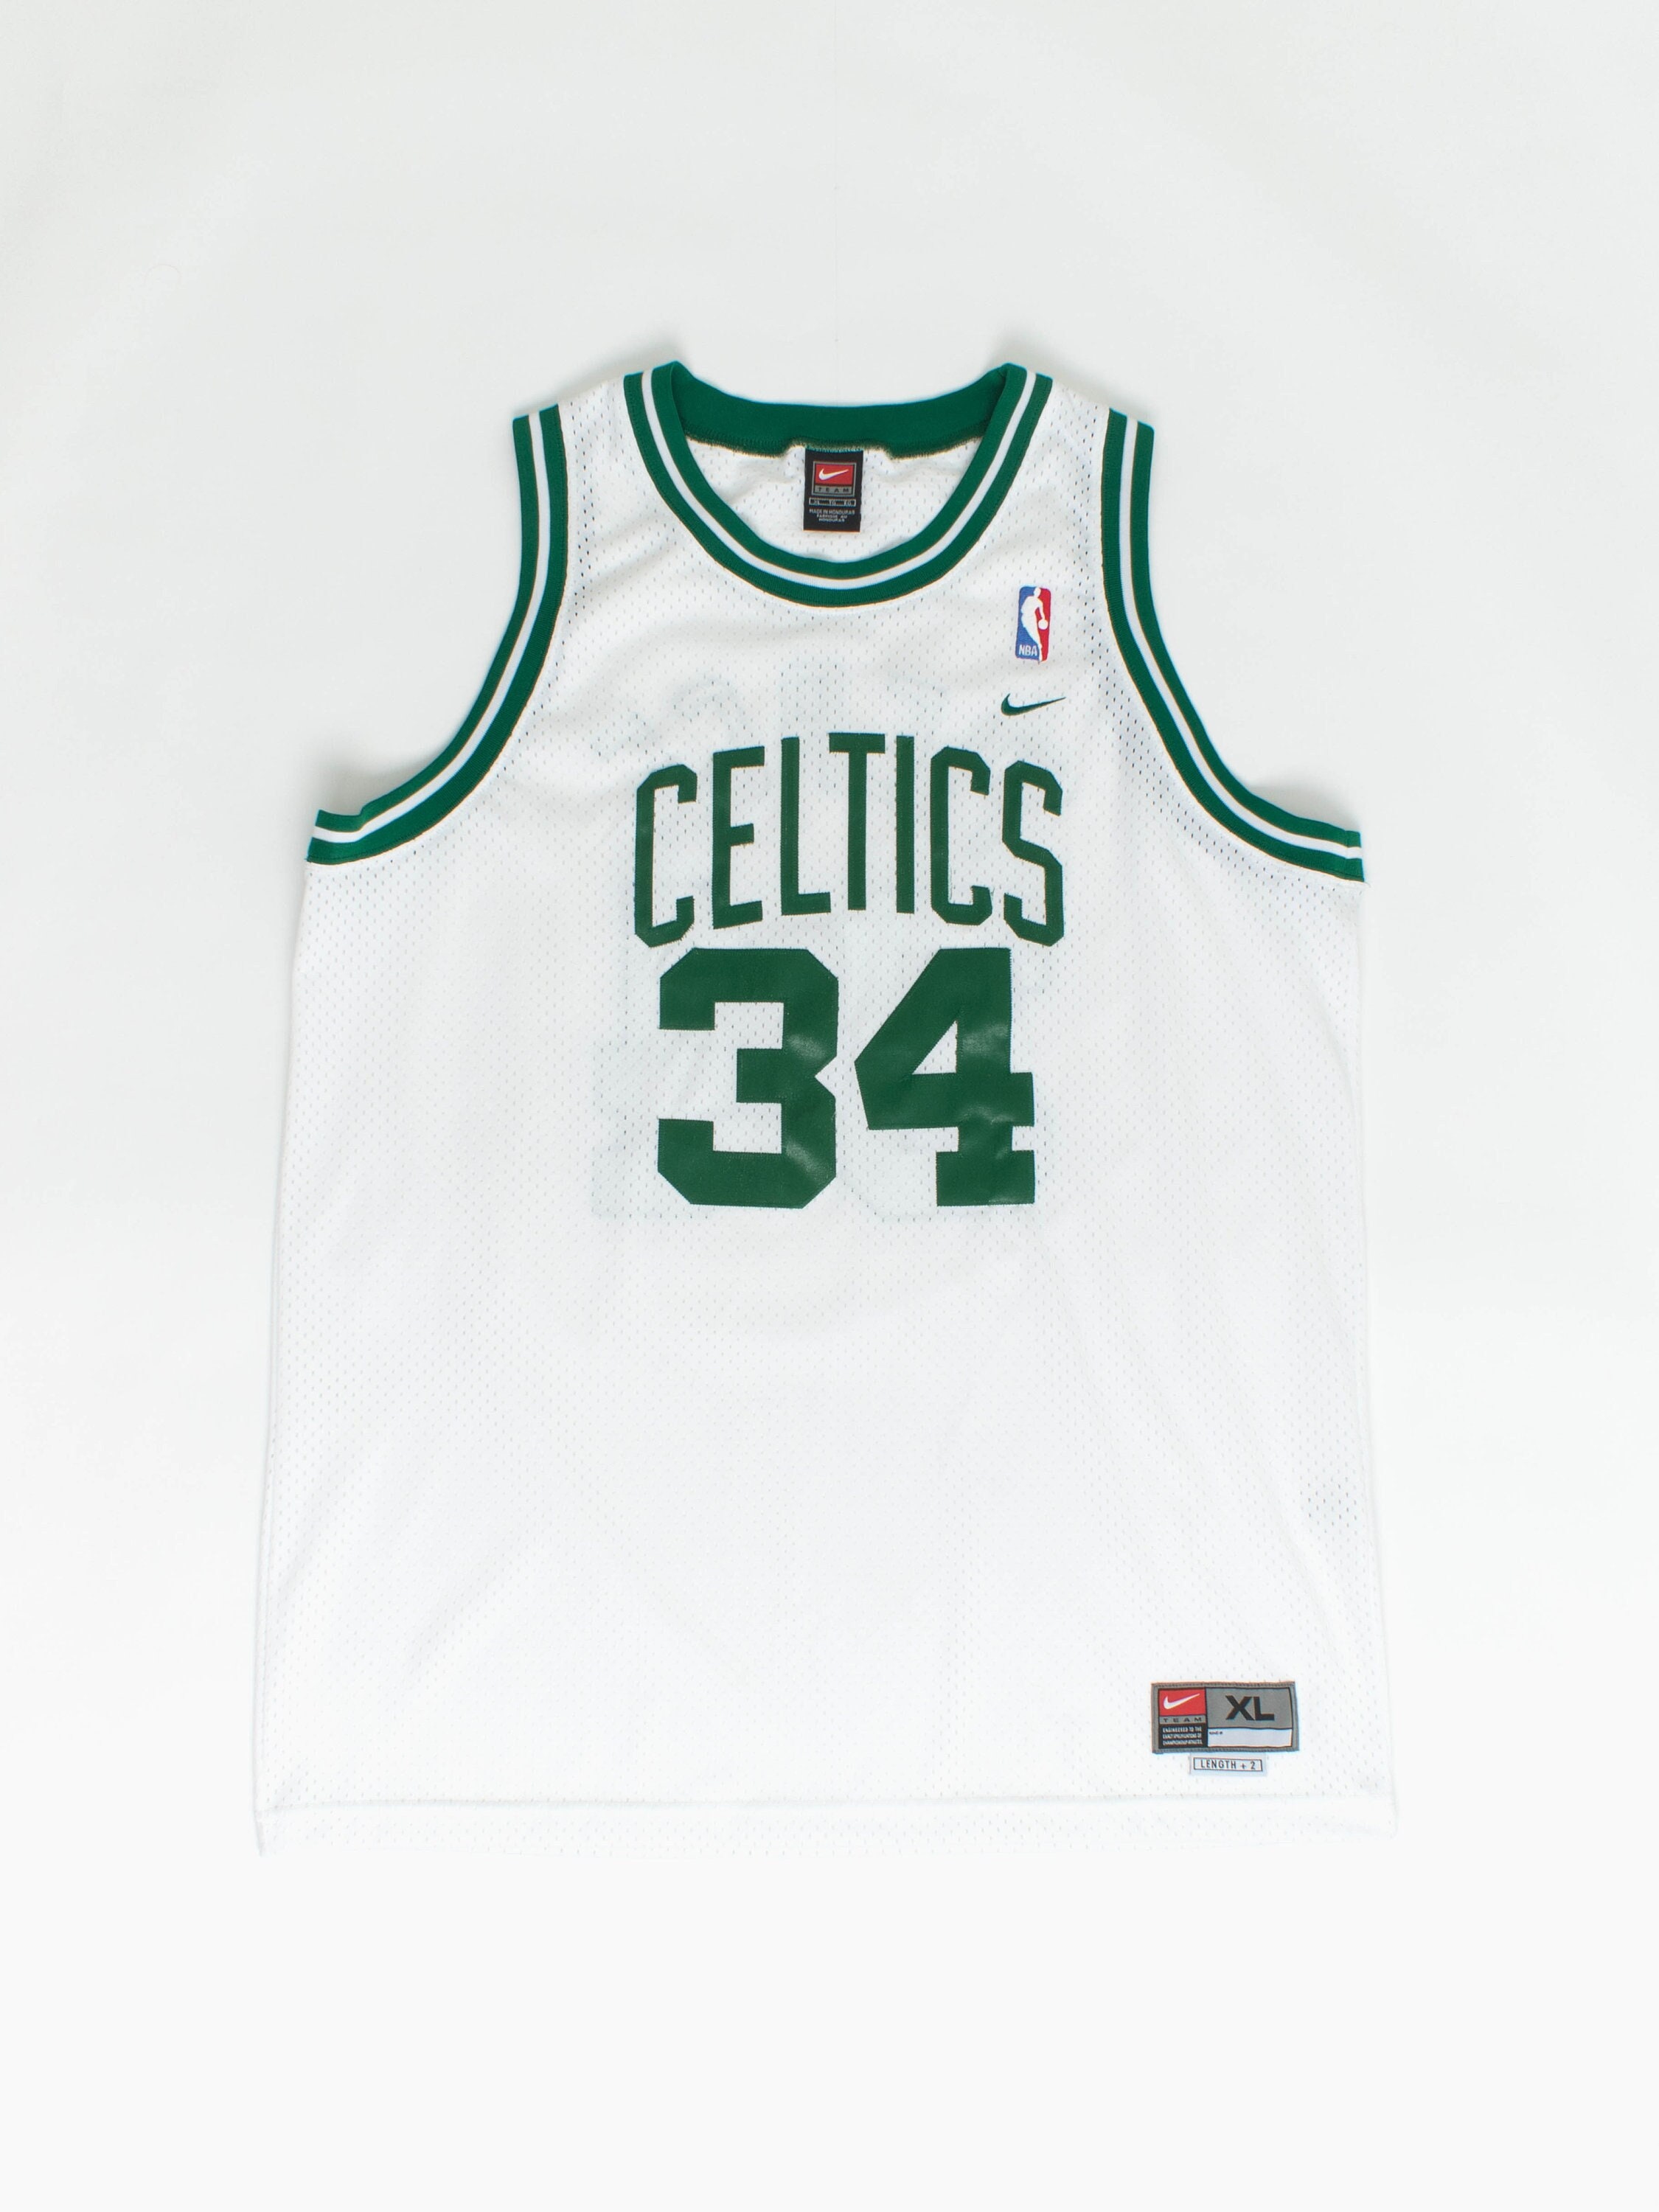 UNK Boston Celtics Jersey Adult Small Black Green White NBA Basketball Mens